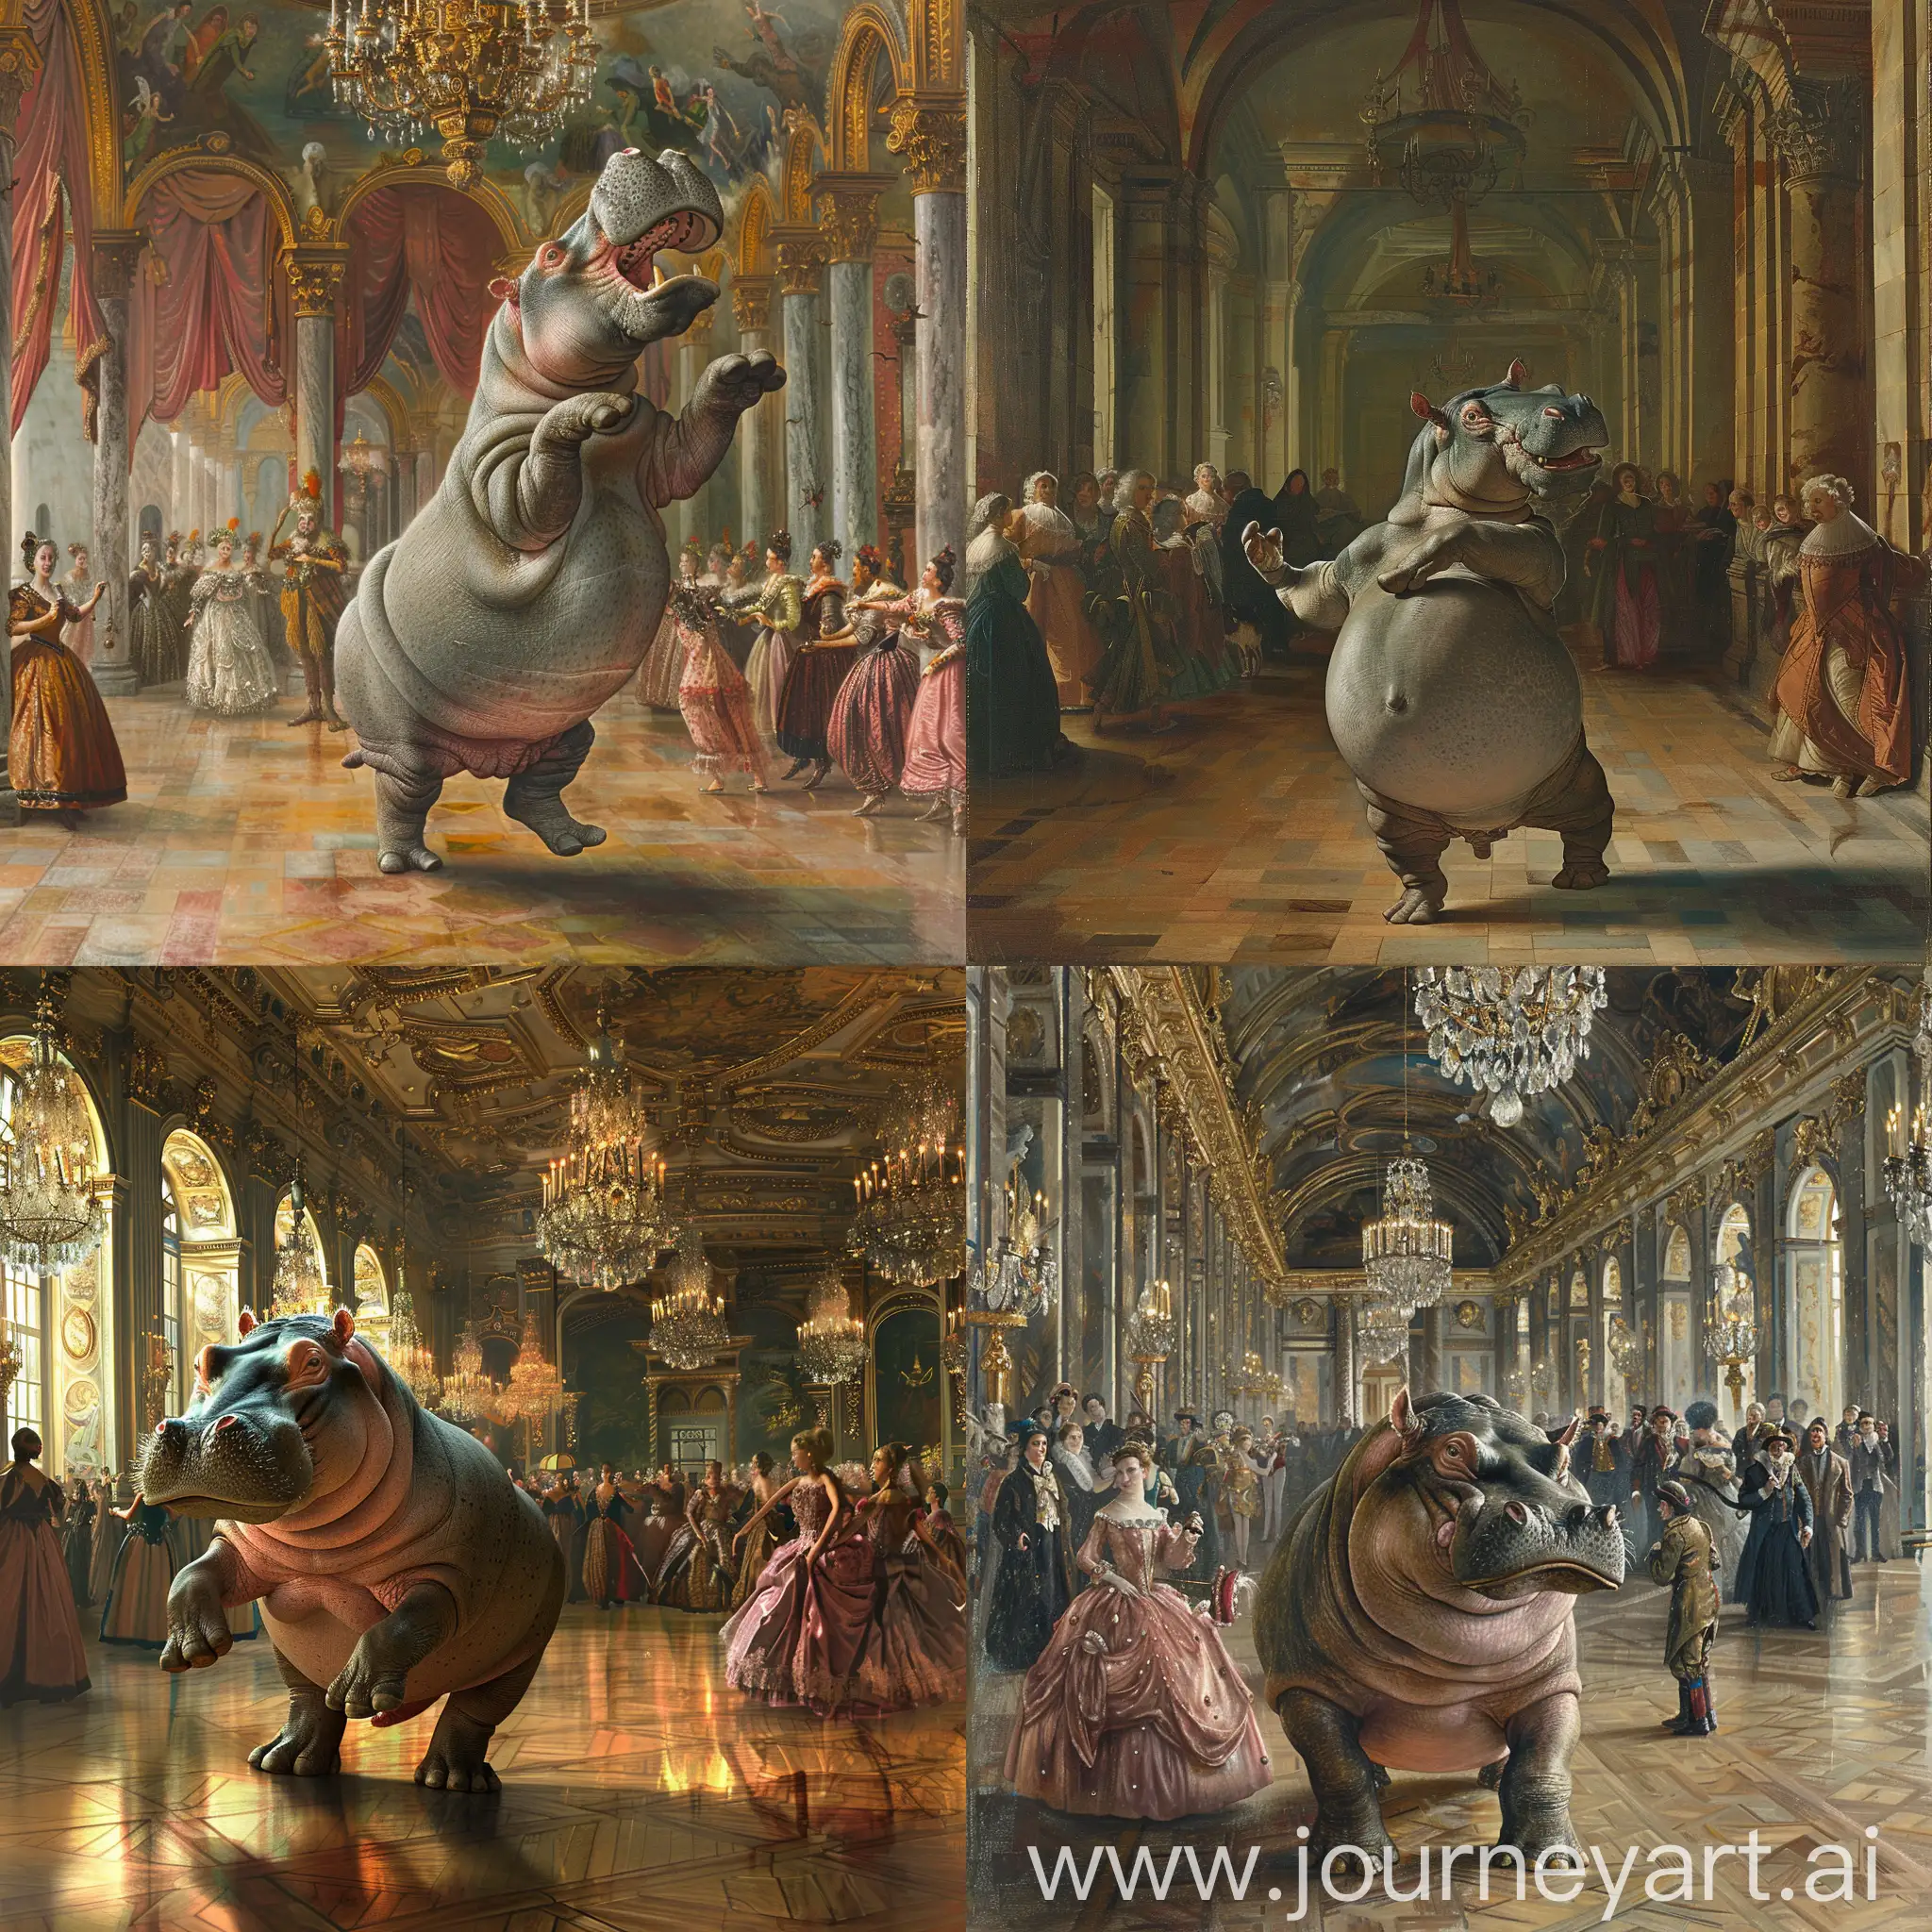 A large Hippopotamus dances Ballet in a large Baroque hall